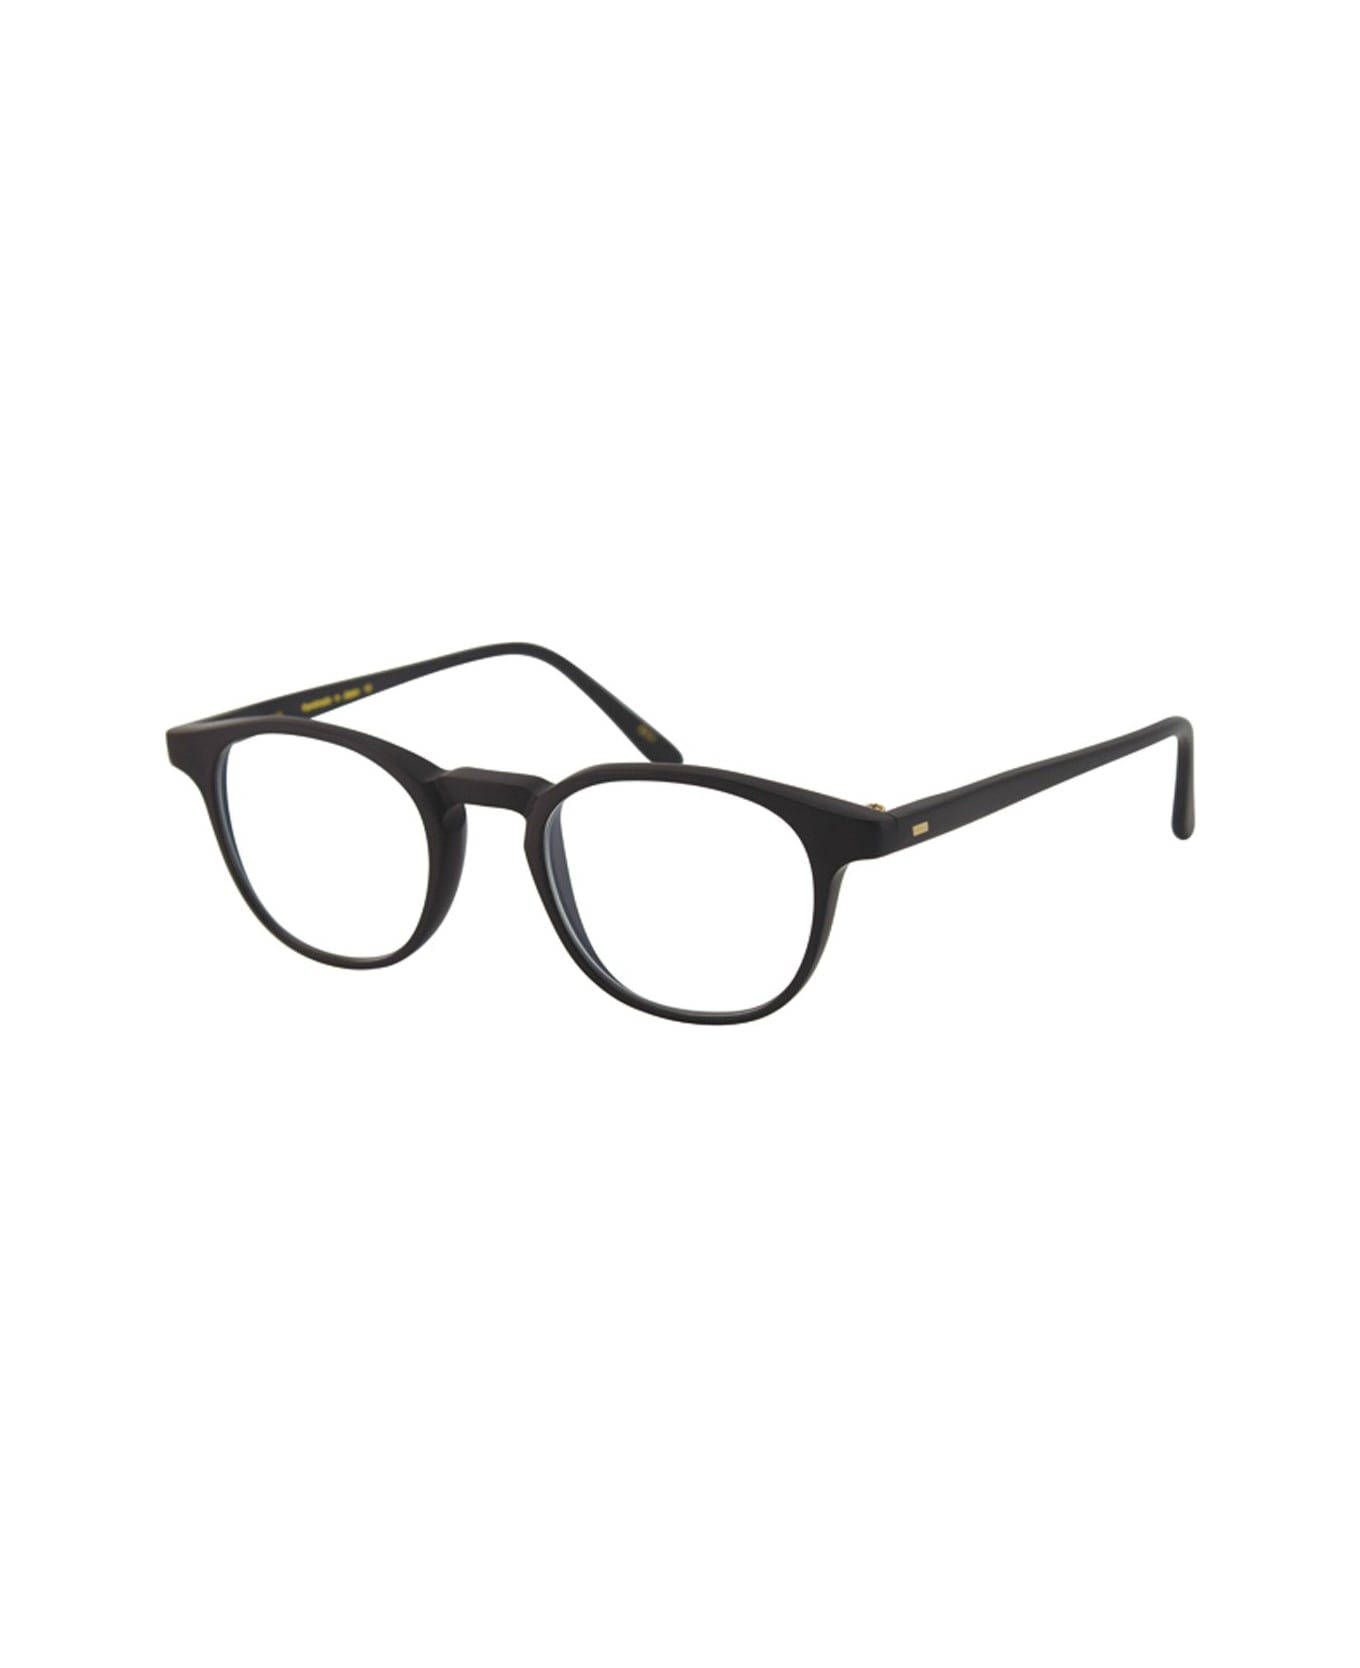 Masunaga Gms-07 Glasses - Nero